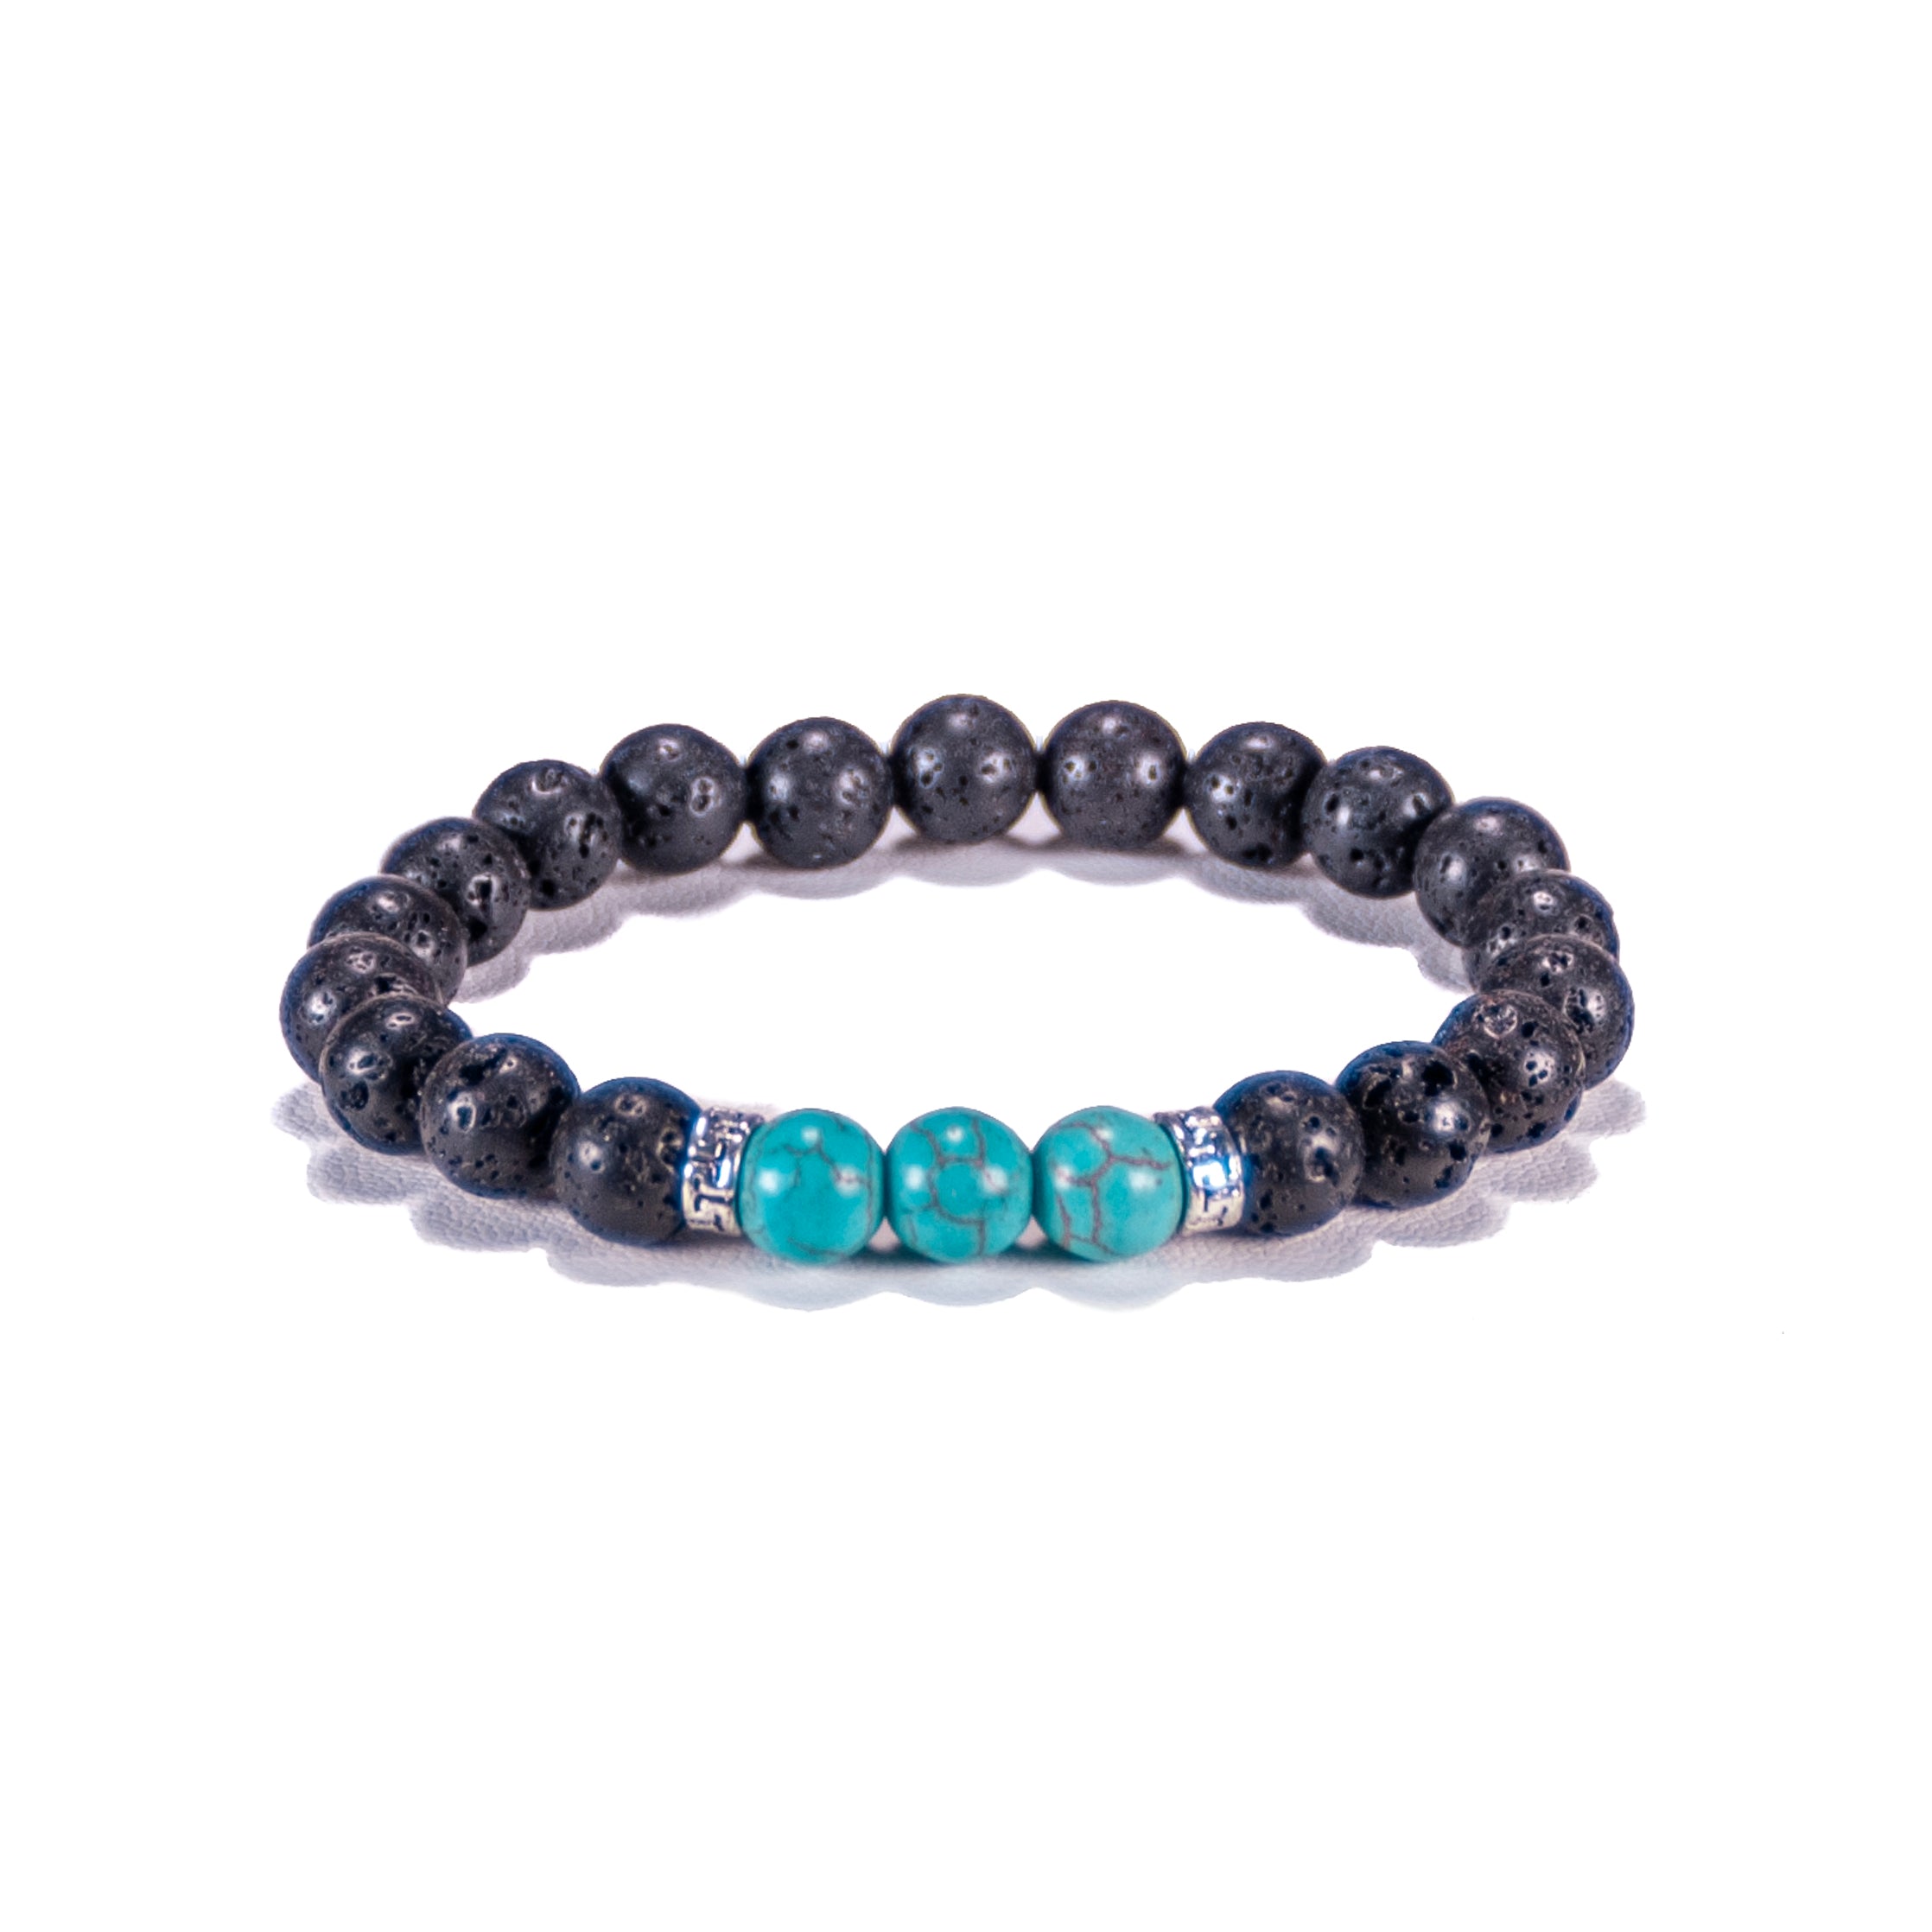 Turquoise Howlite Gemstone Beads on Lava Rock Beads Bracelet